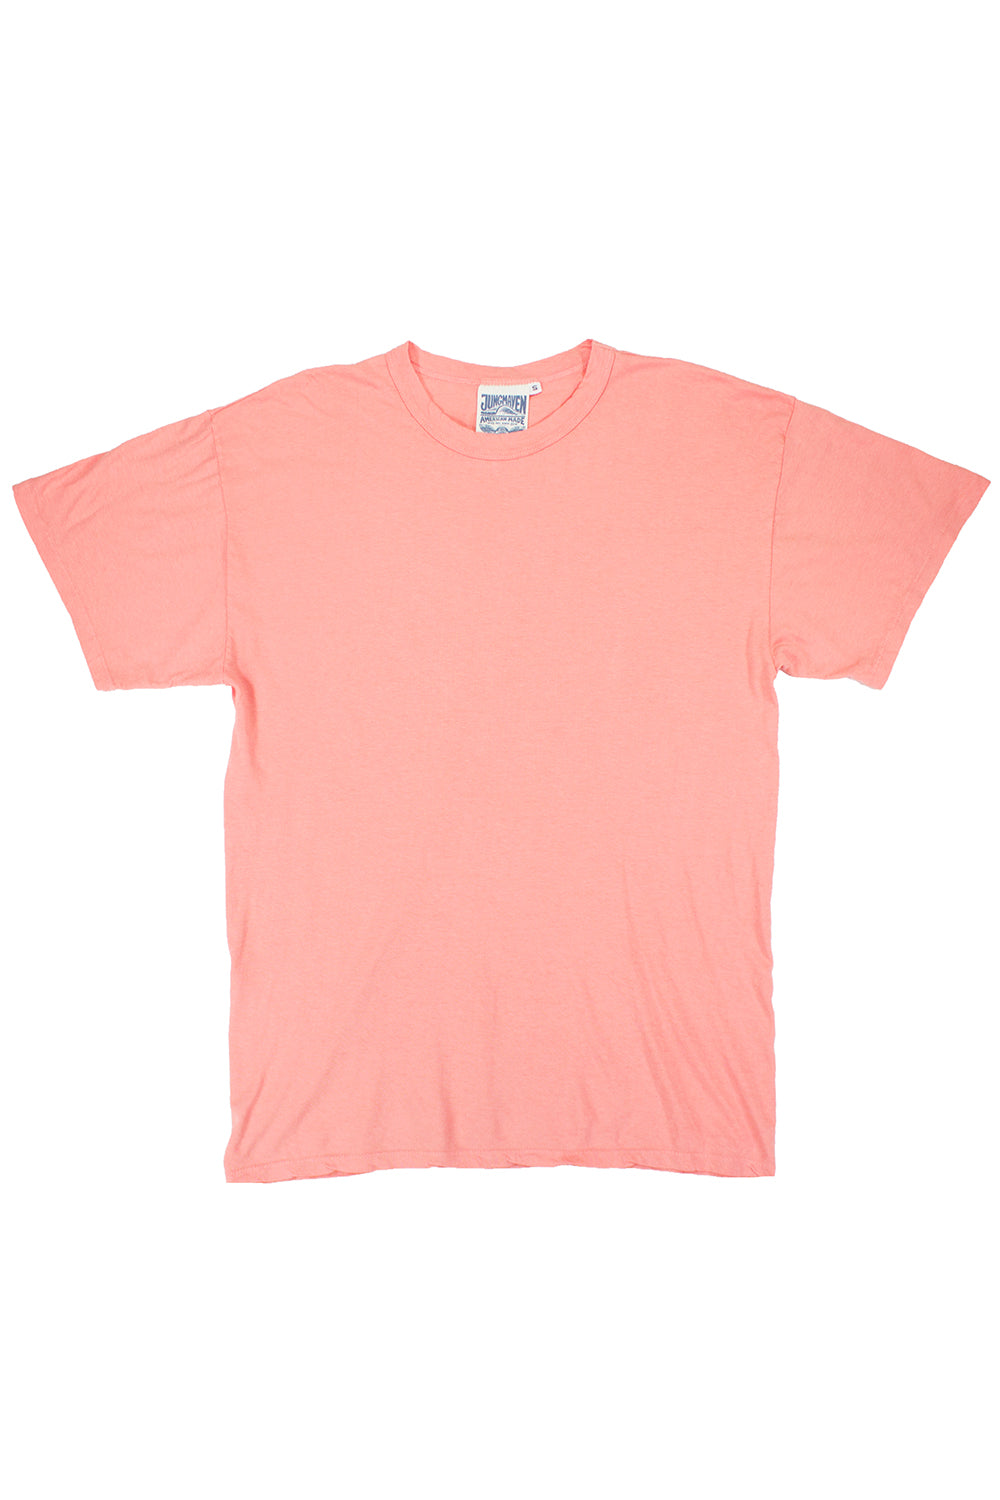 Index Tee | Jungmaven Hemp Clothing & Accessories / Color: Pink Salmon